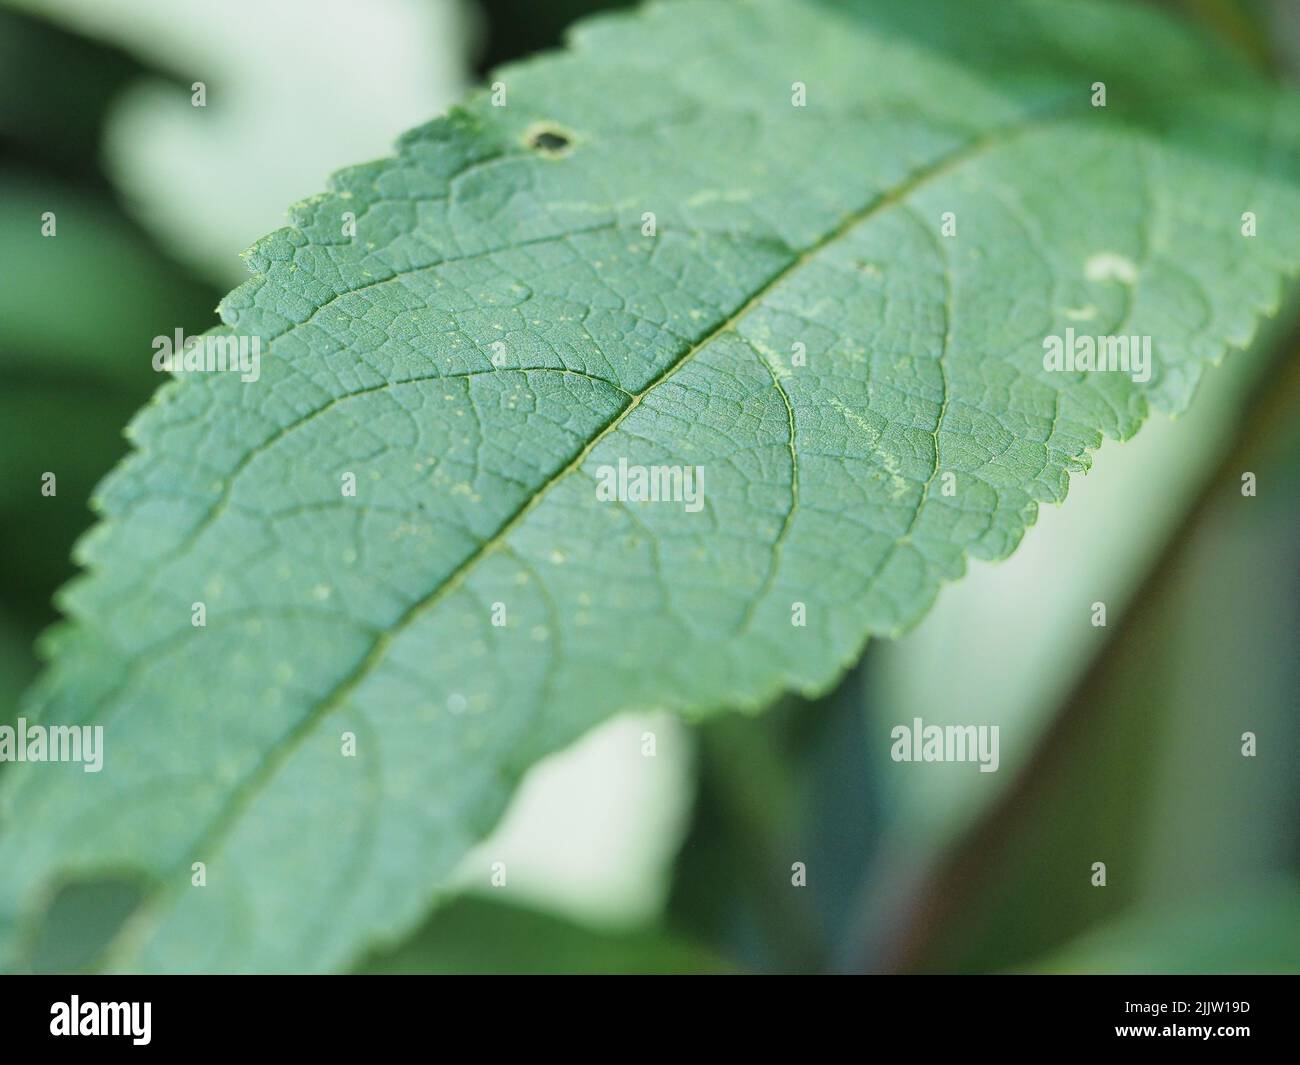 Macro of single green leaf veins visible Stock Photo